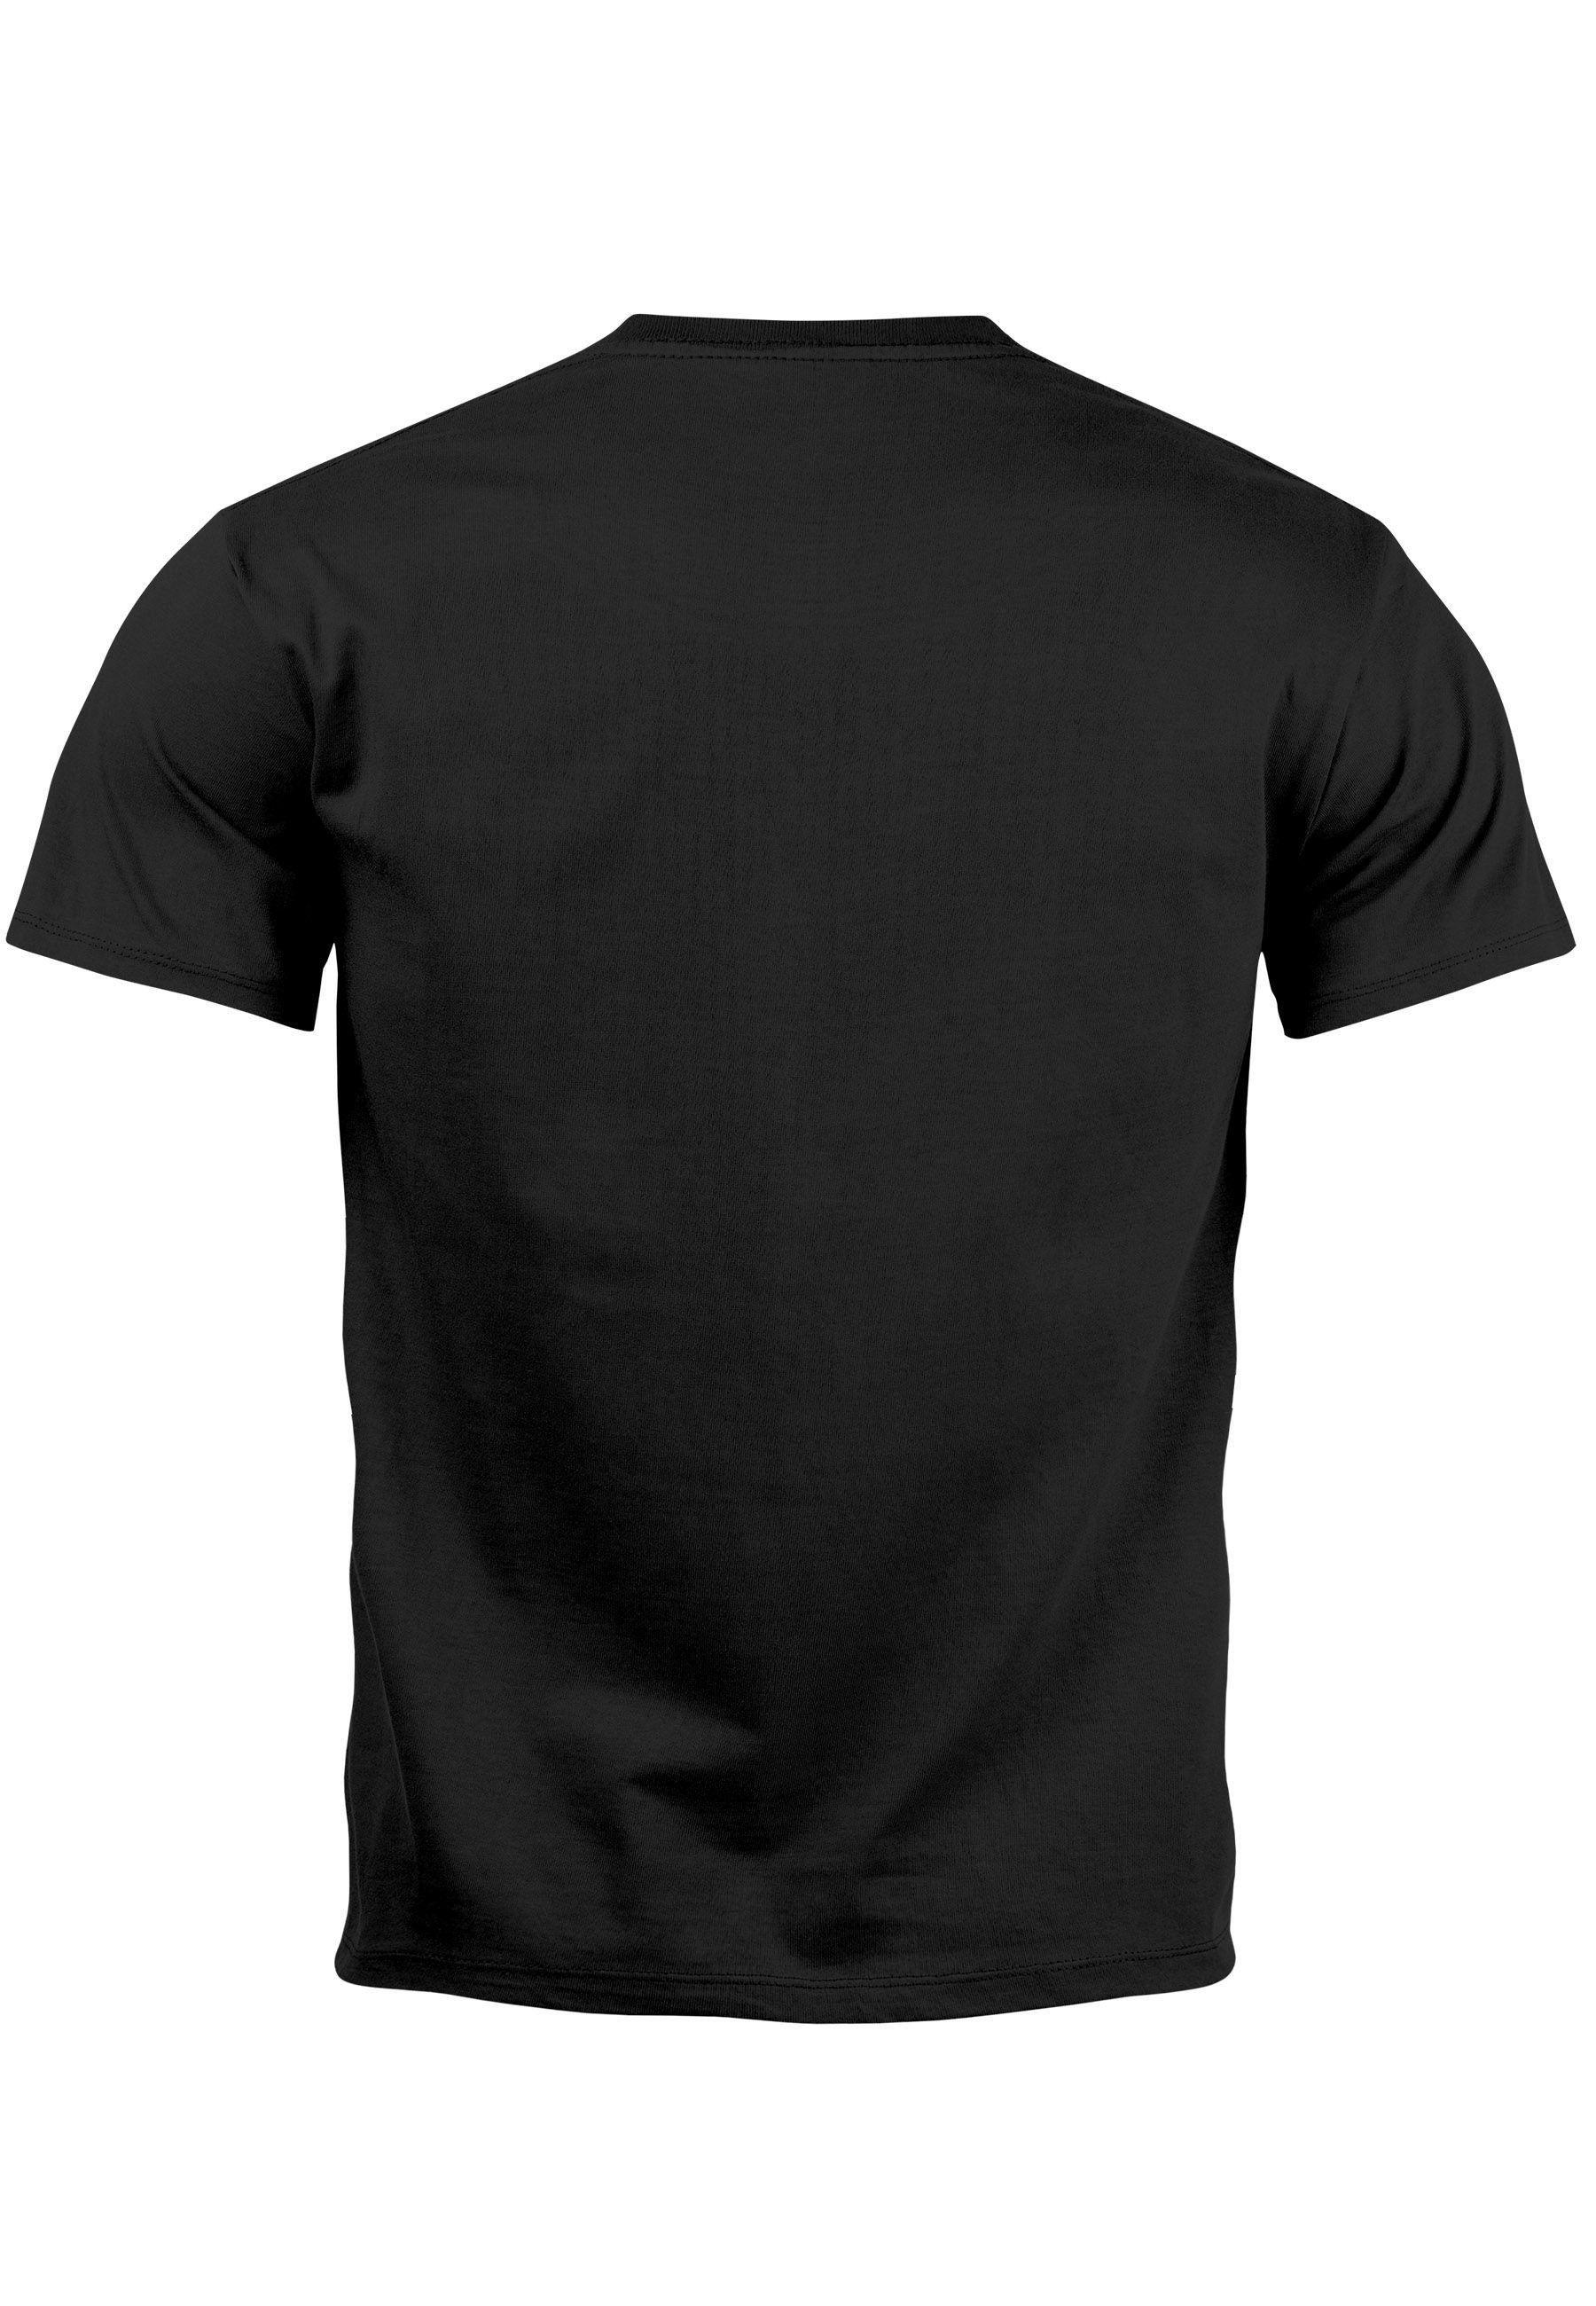 Print Aufdruck Neverless mit Print Drip schwarz Face Print-Shirt Motiv Herren Fashi Printshirt T-Shirt Smiling